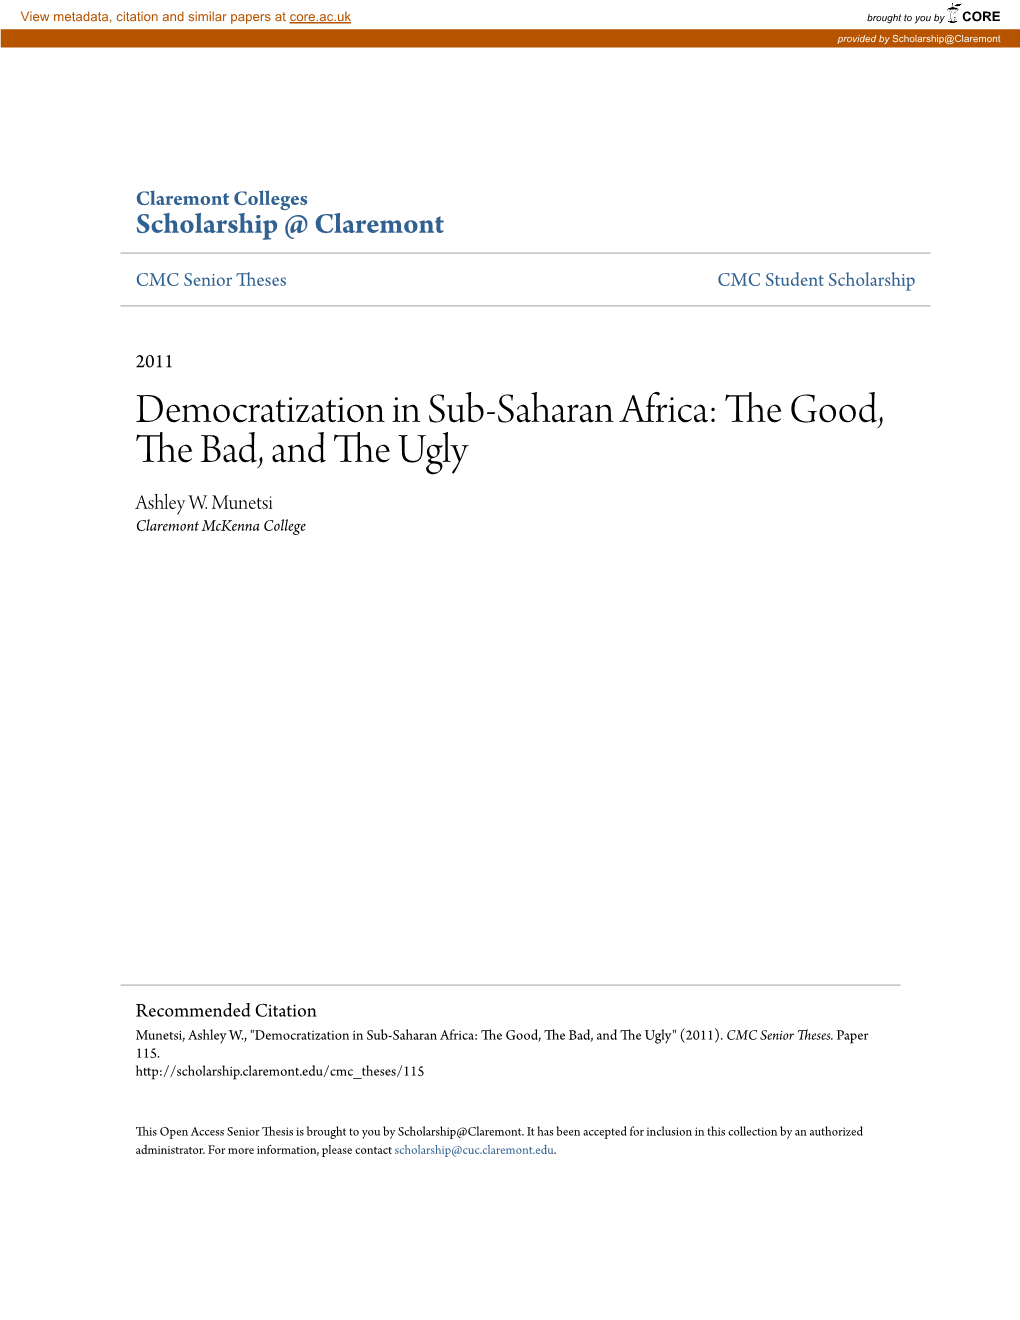 Democratization in Sub-Saharan Africa: the Good, the Ab D, and the Glu Y Ashley W